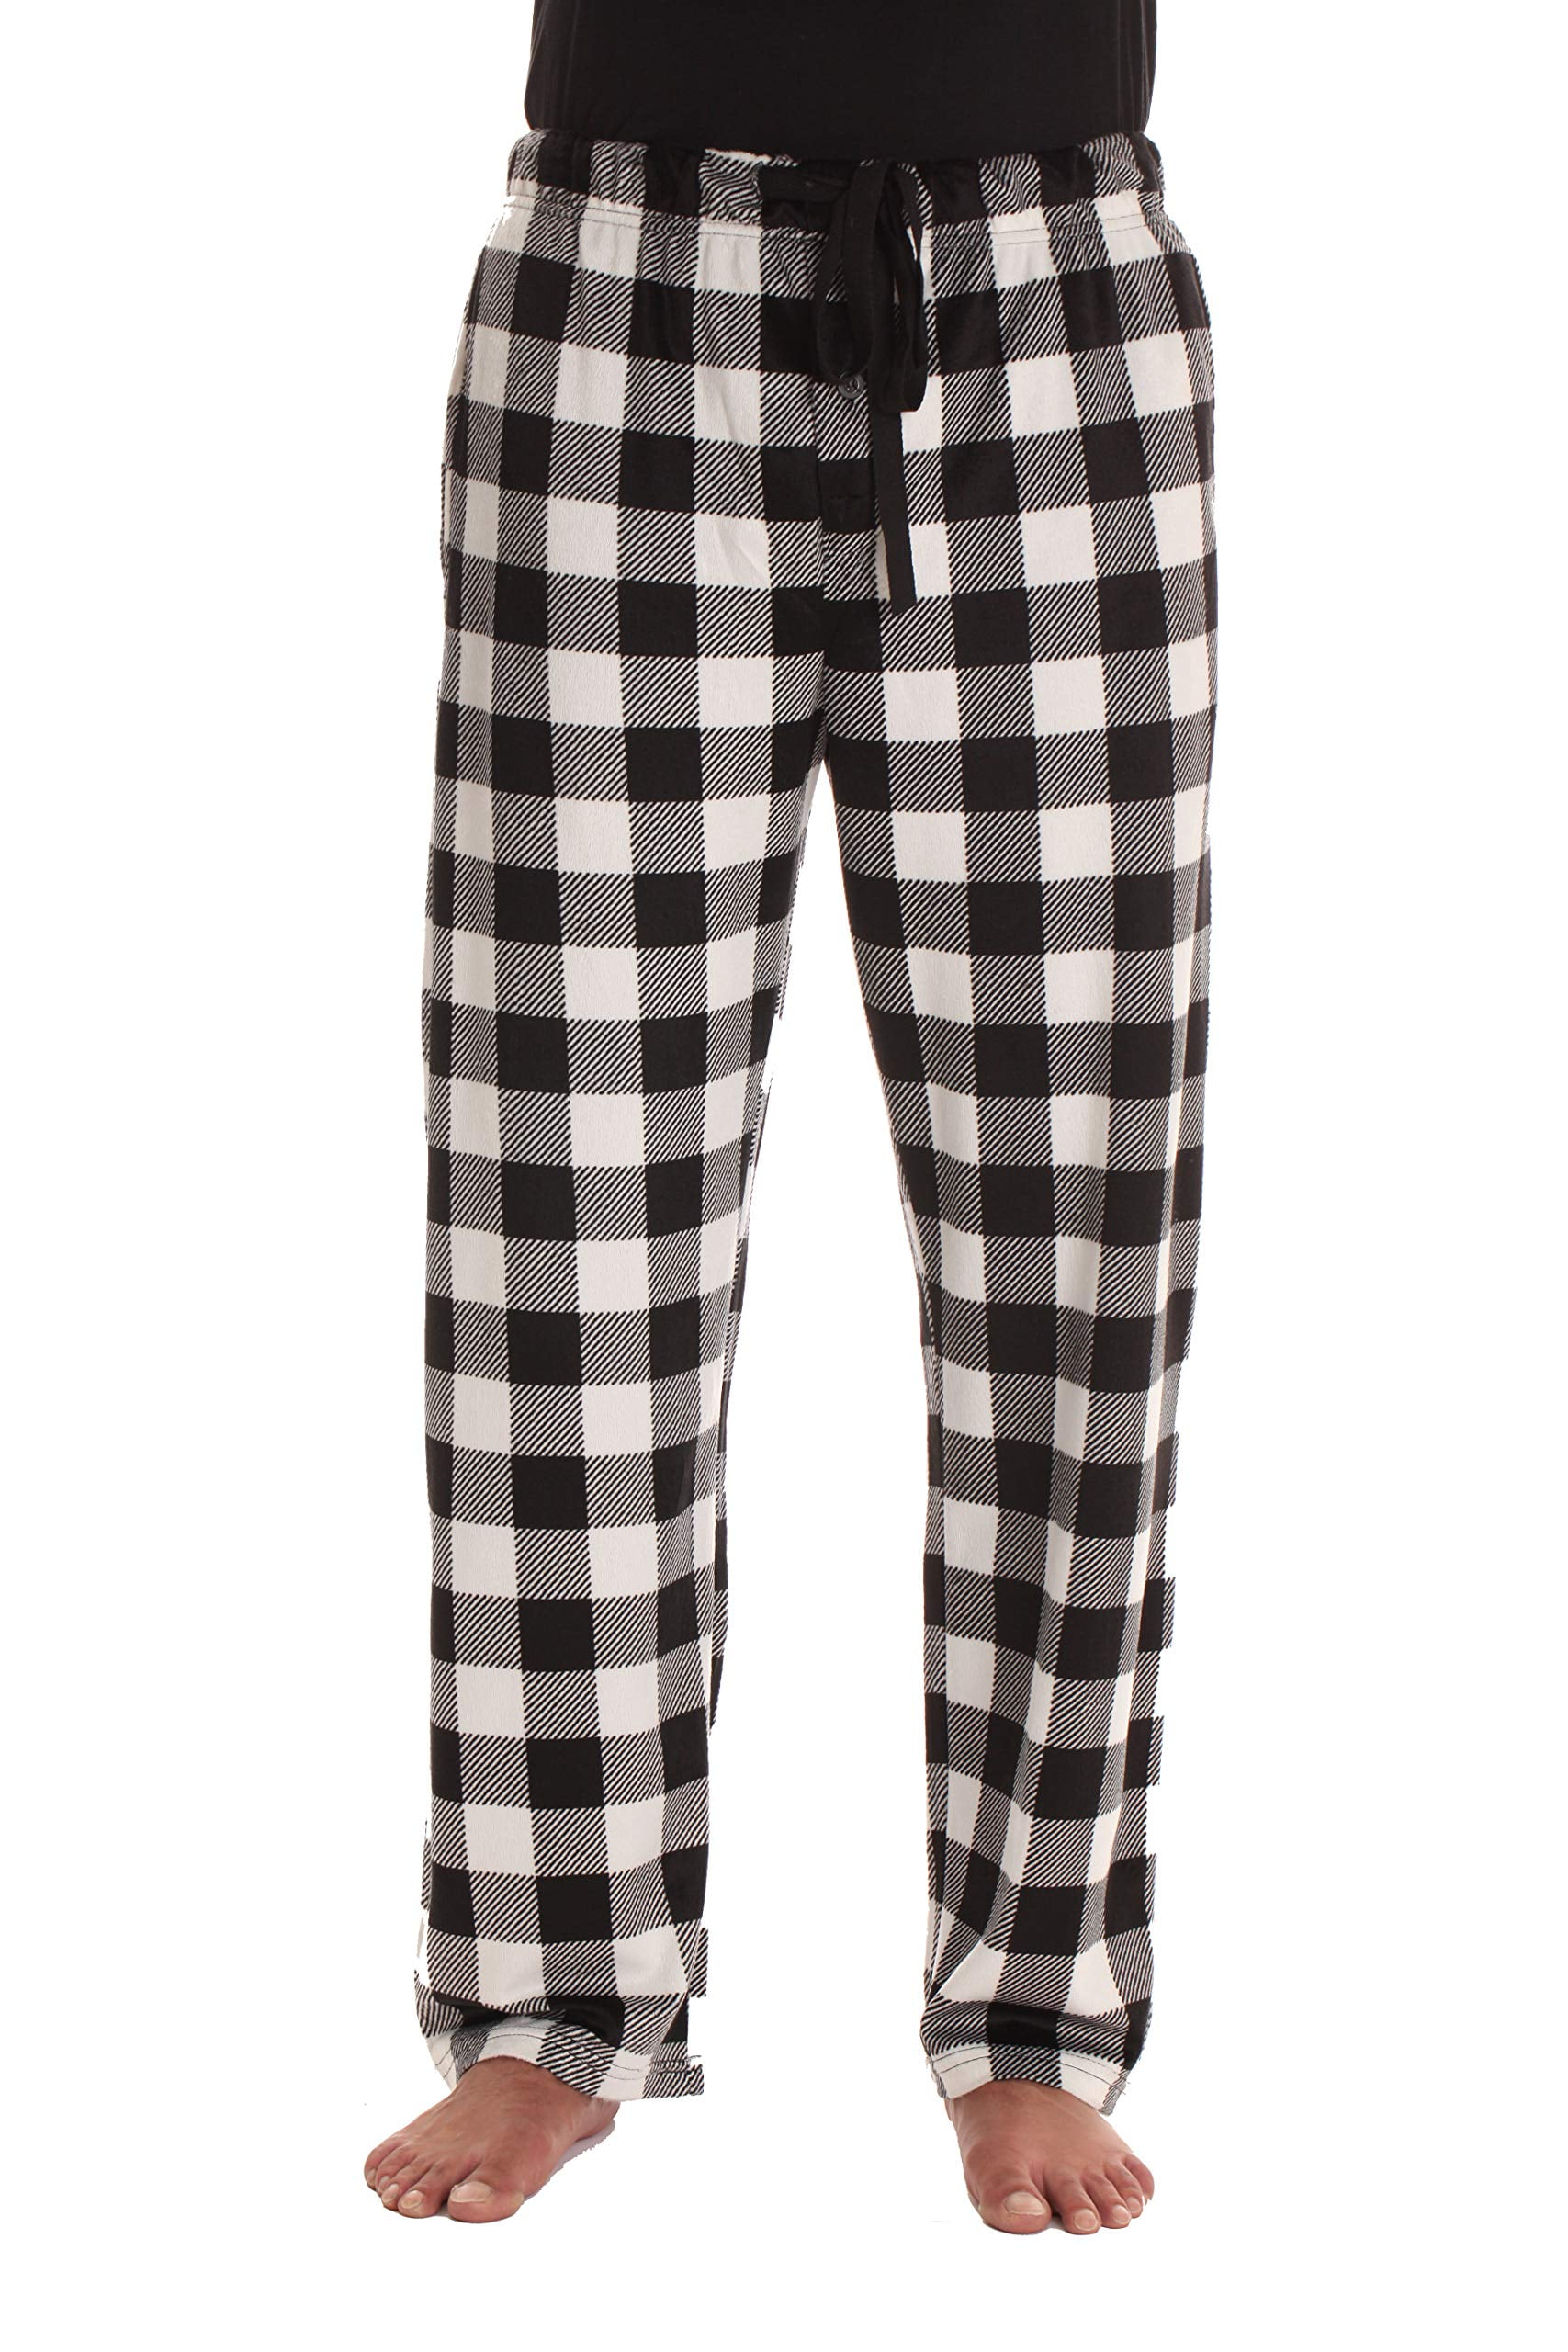 #followme Ultra Soft Fleece Men's Plaid Pajama Pants with Pockets ...